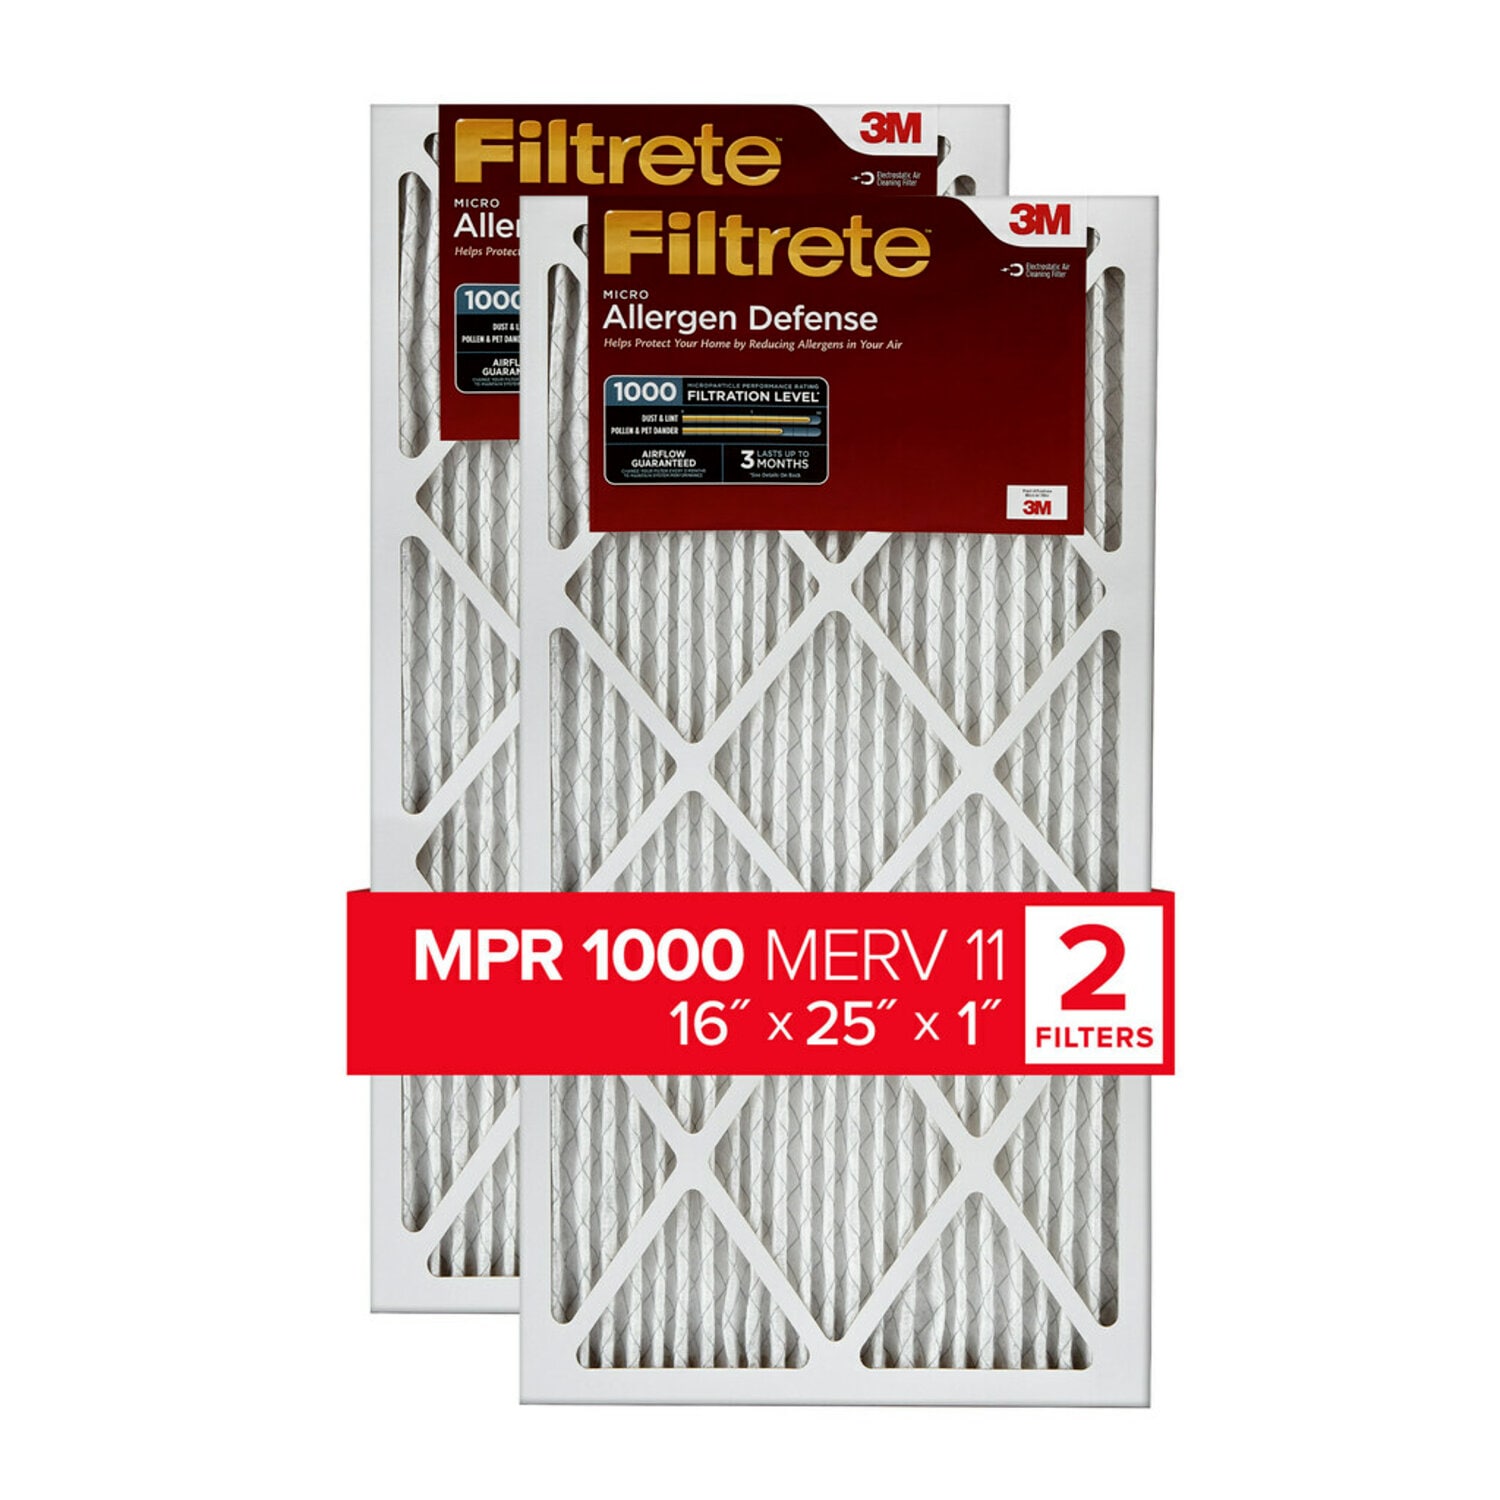 7100212117 - Filtrete Allergen Defense Filter AD01-2PK-1E, 16 in x 25 in x 1 in (40.6 cm x 63.5 cm x 2.5 cm) ,